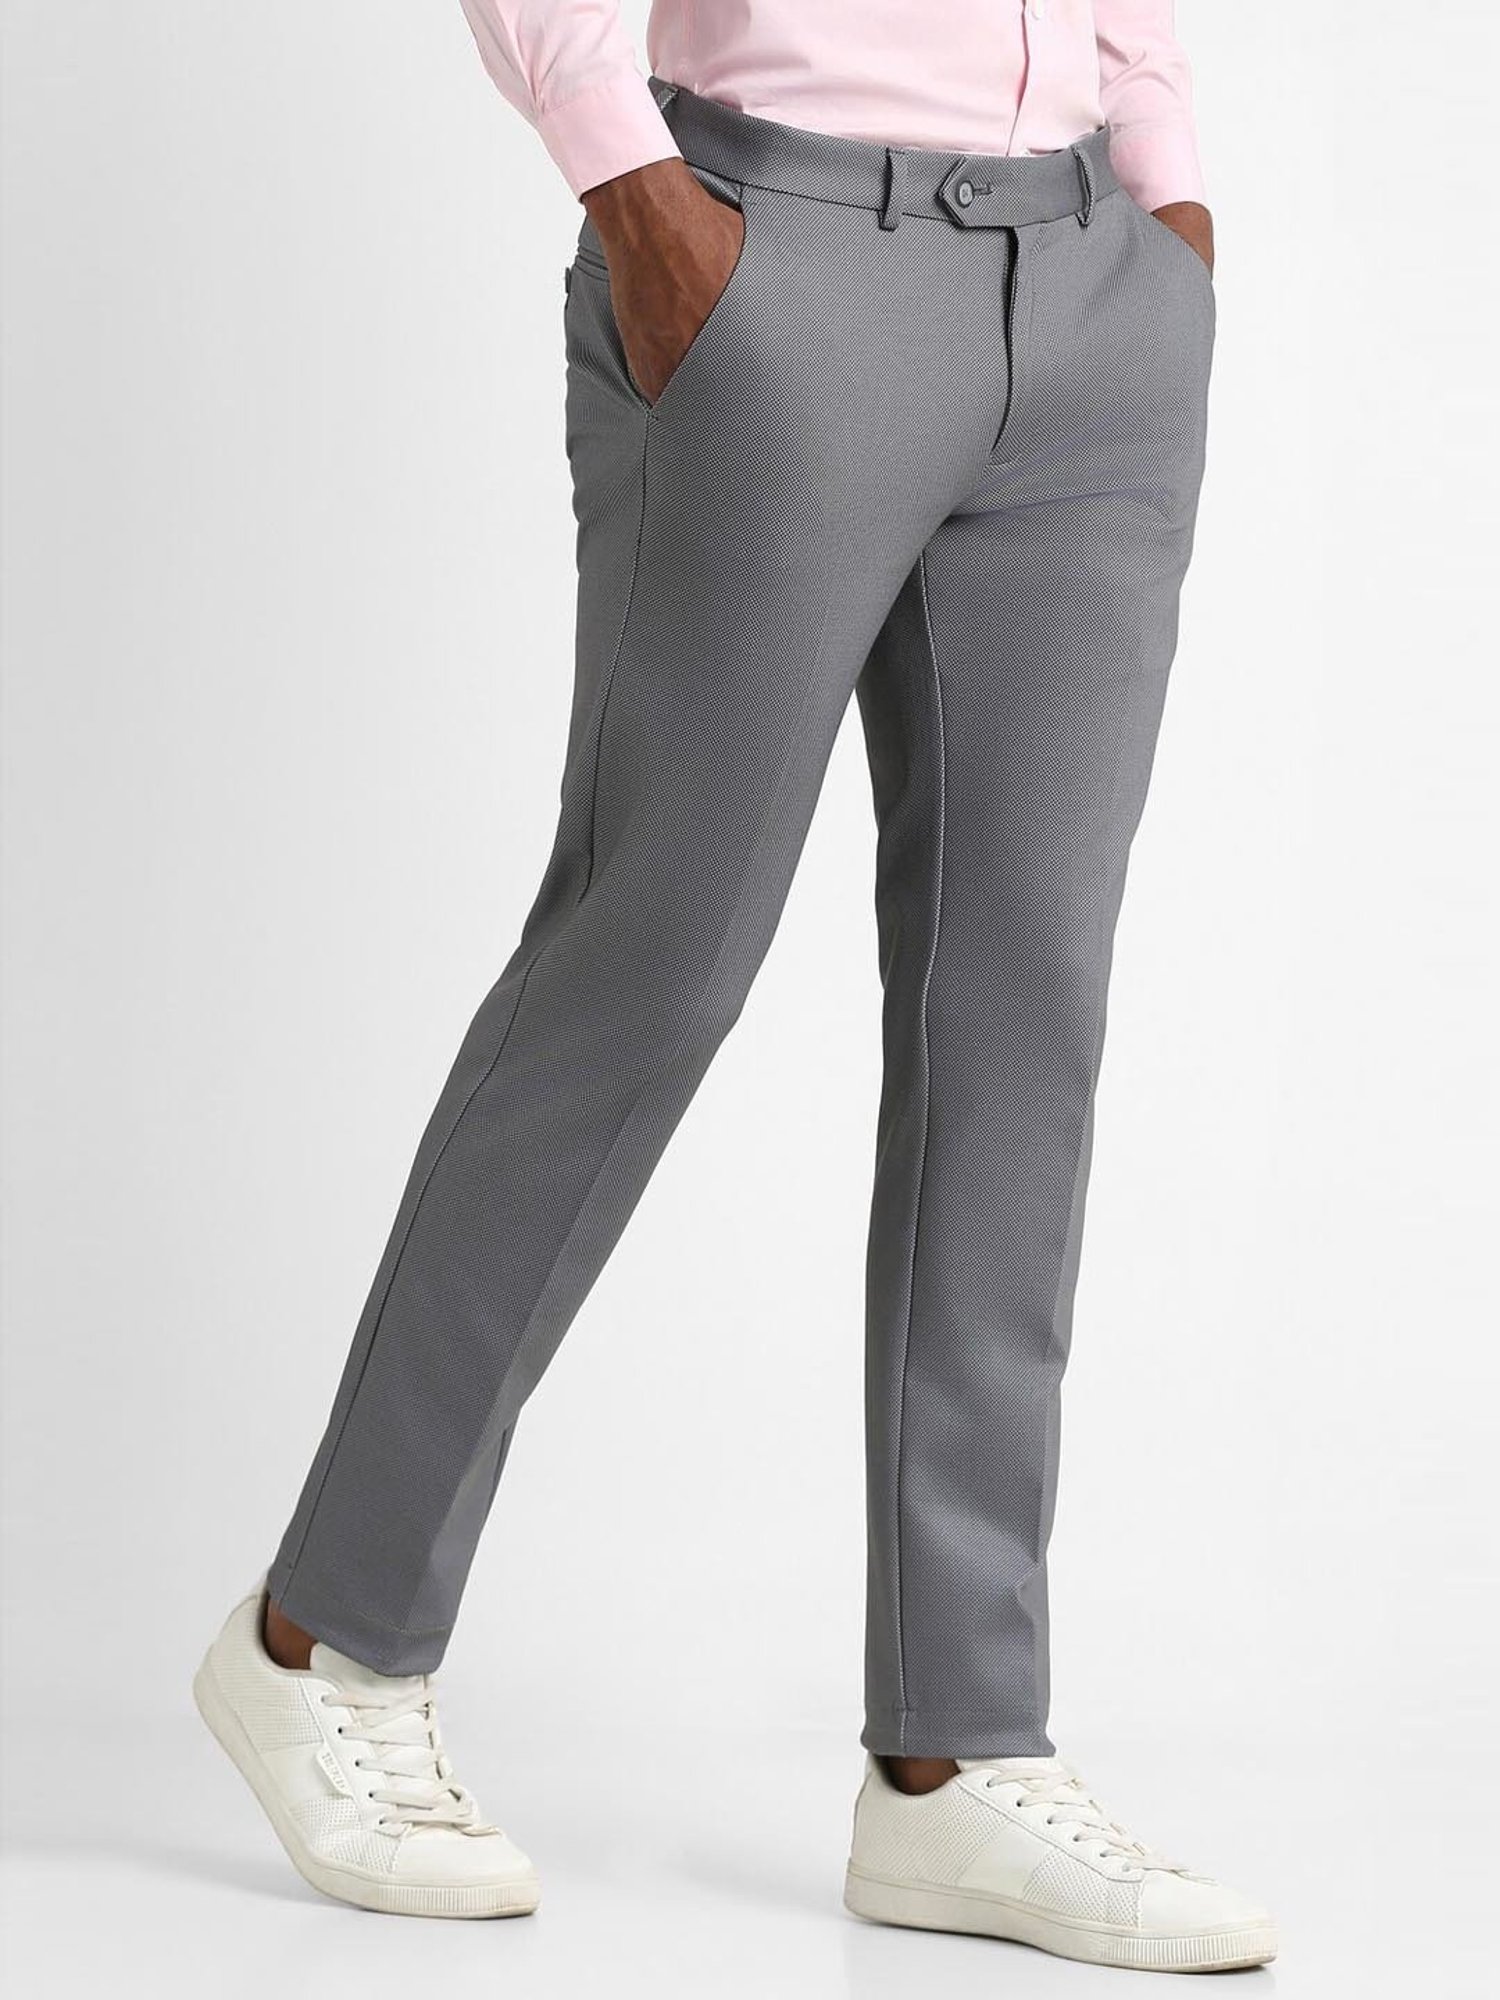 Buy Peter England Men's Slim Pants (PITFWNSPQ65324_Beige at Amazon.in